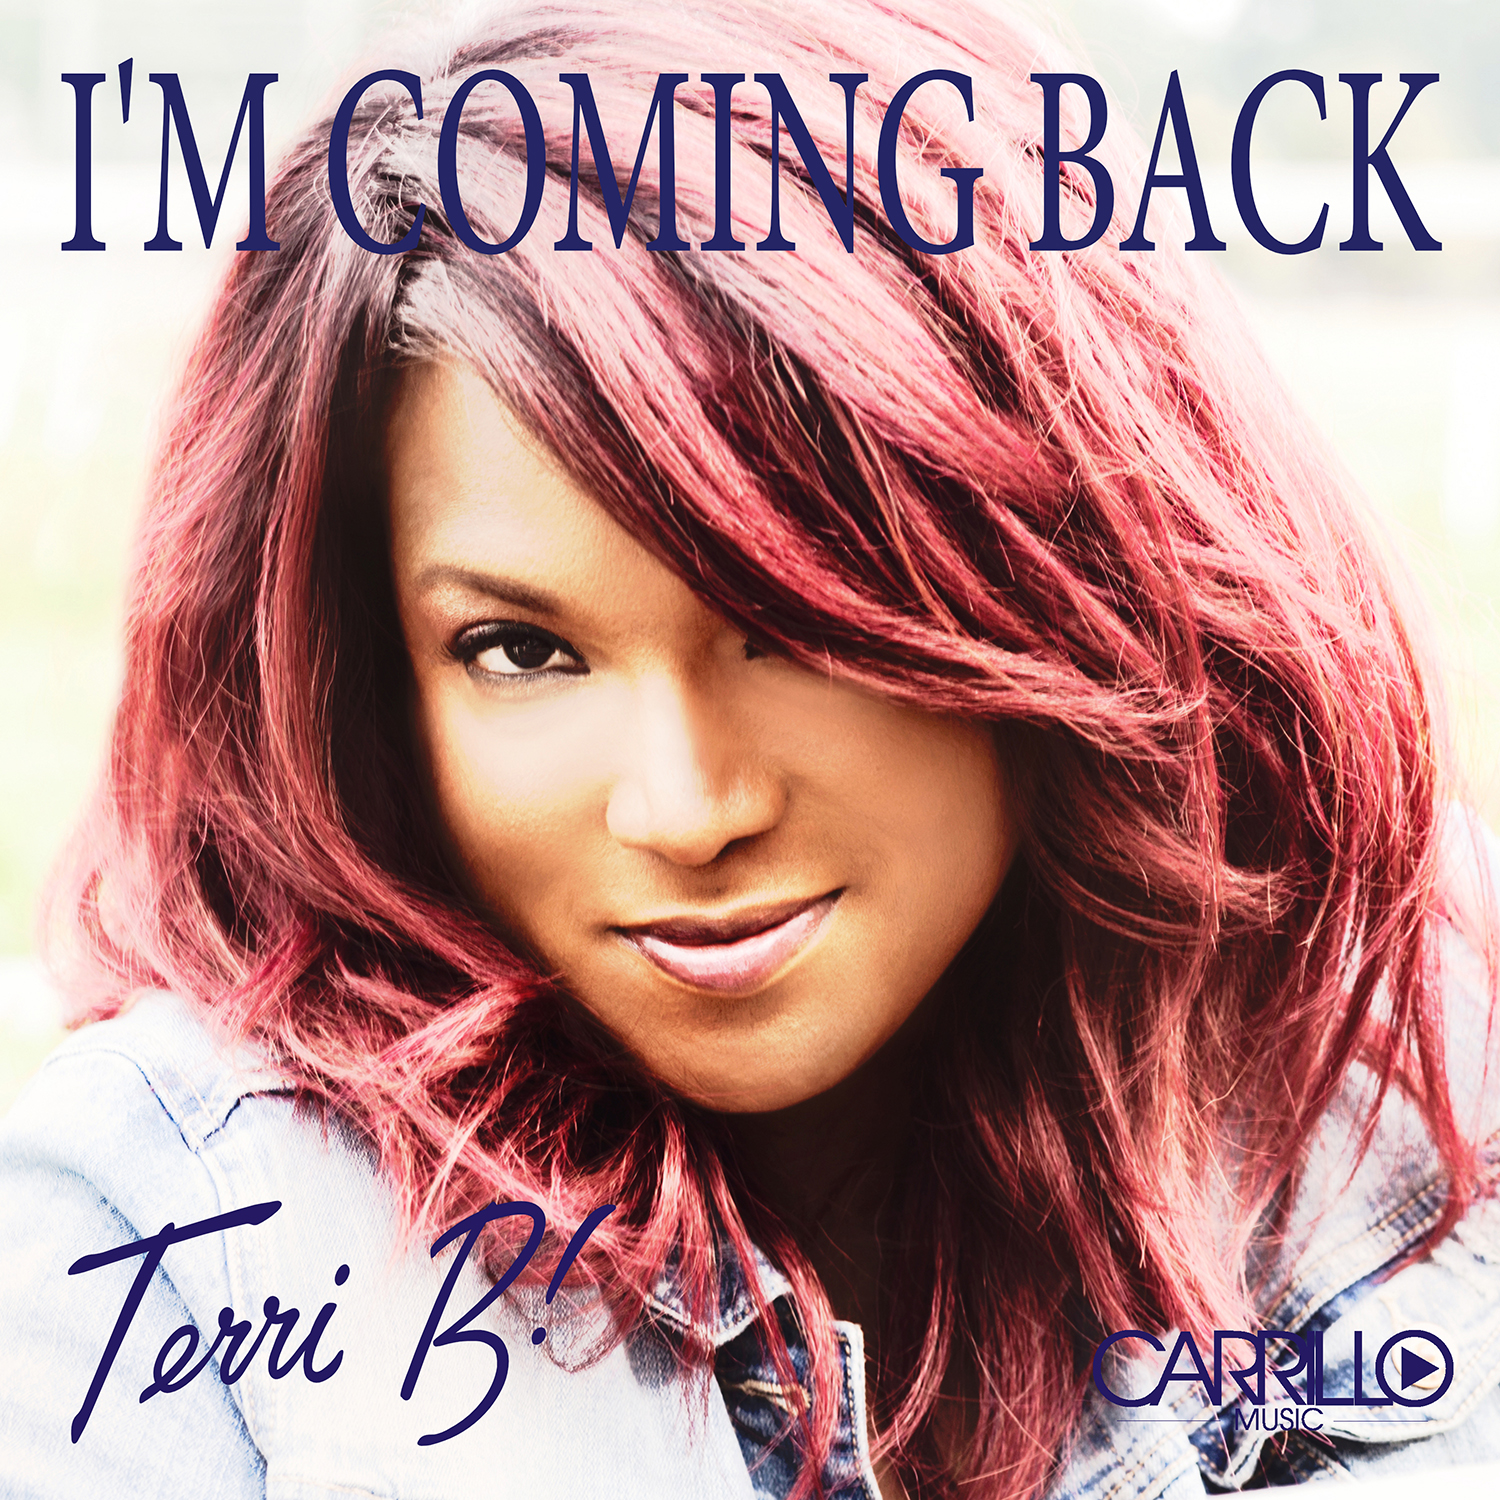 I'm Coming Back - Terri B! - Carrillo Music